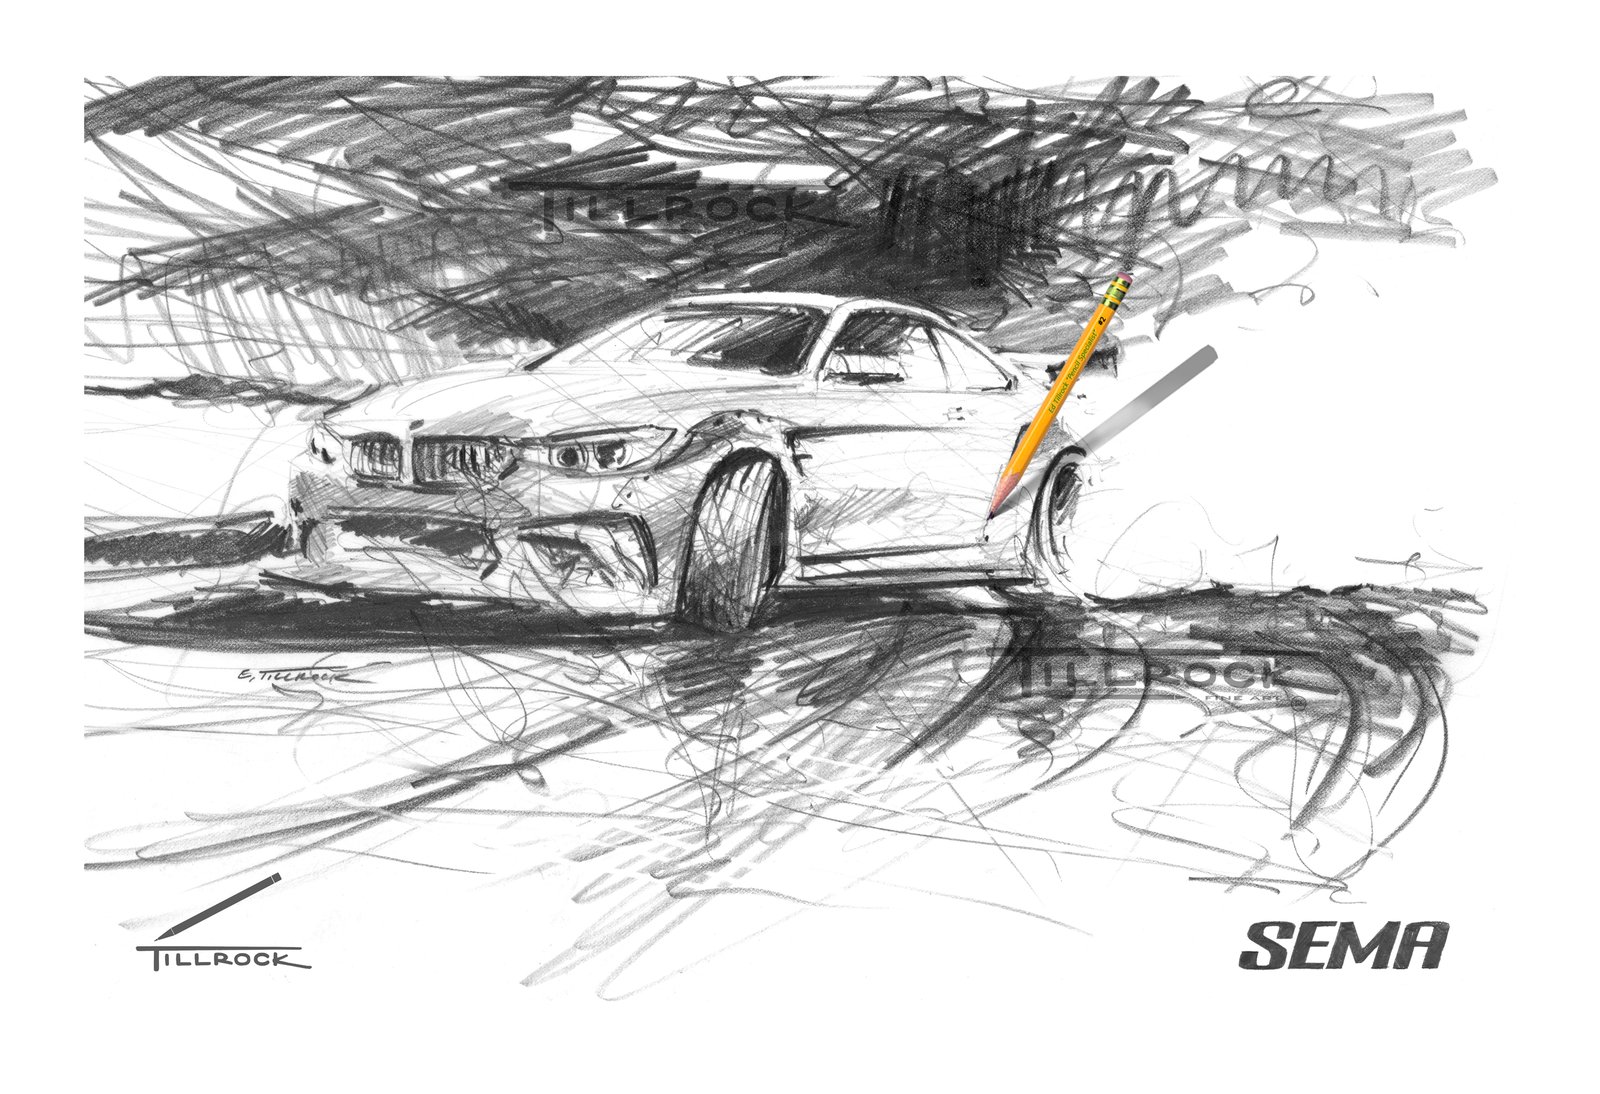 LA MOTOR SHOW: BMW electric i car concept - carsales.com.au